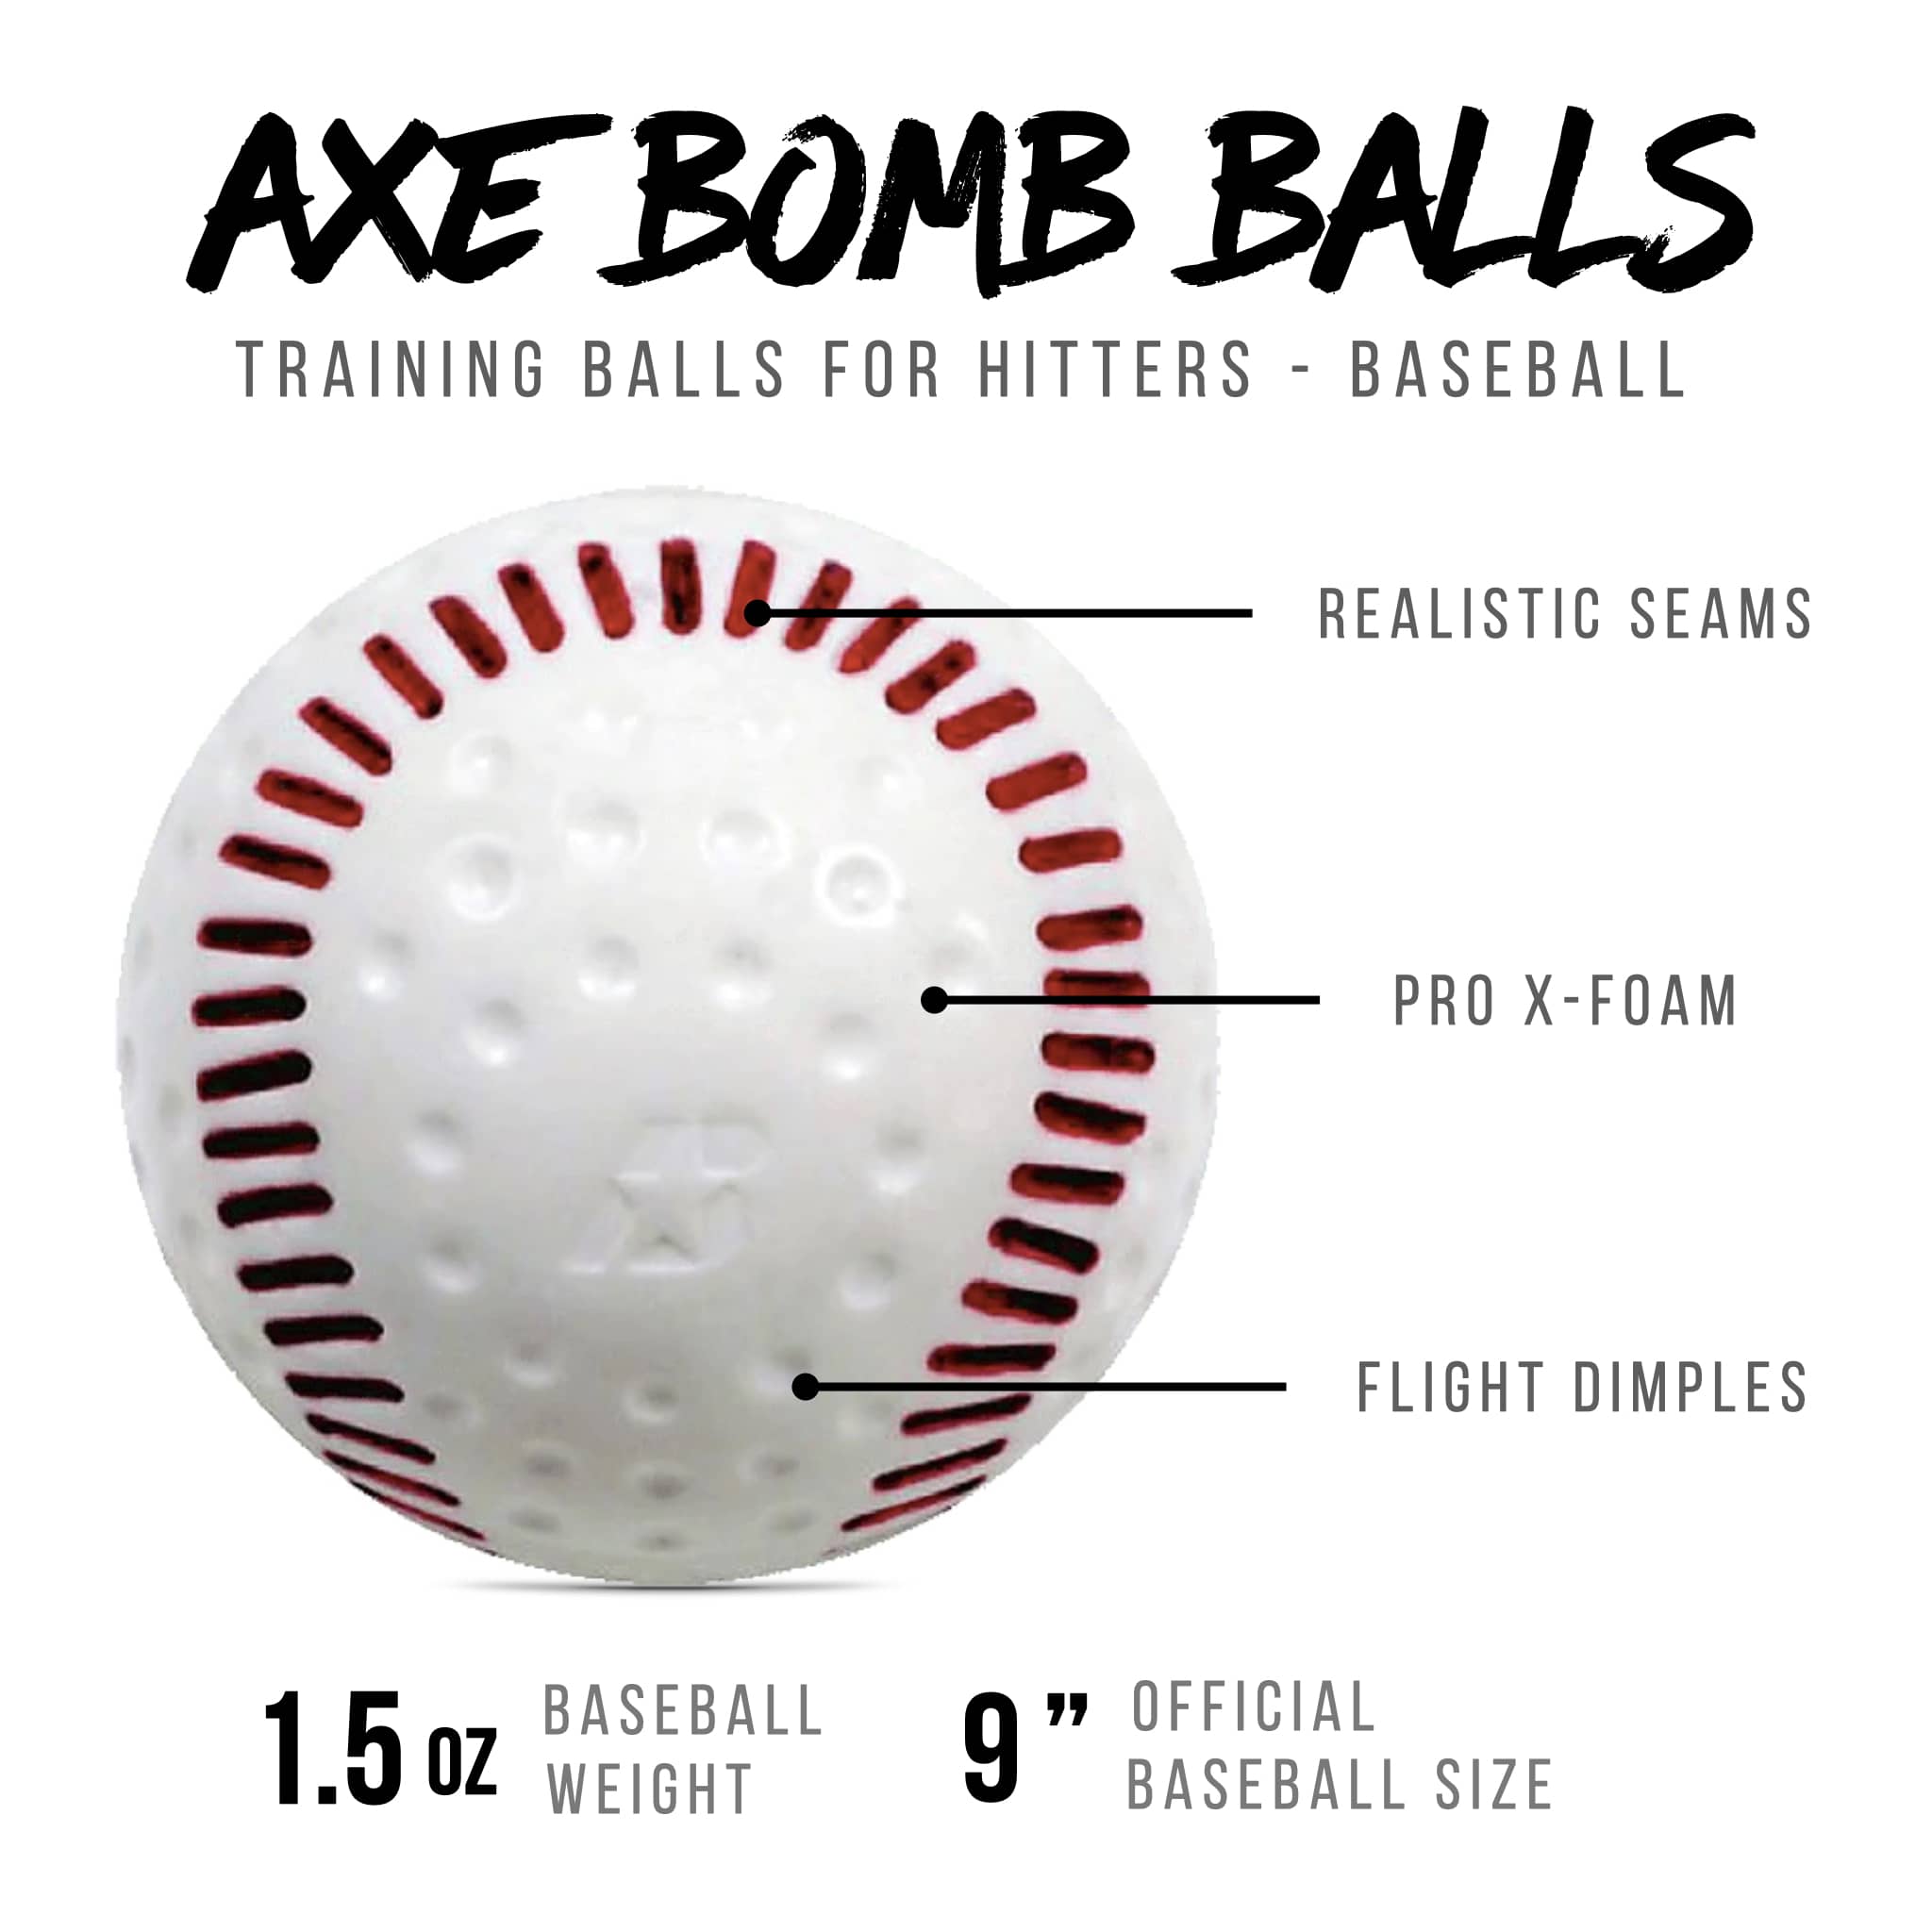 The Anywhere Ball Baseball/Softball Foam Training Ball (12 Pack)